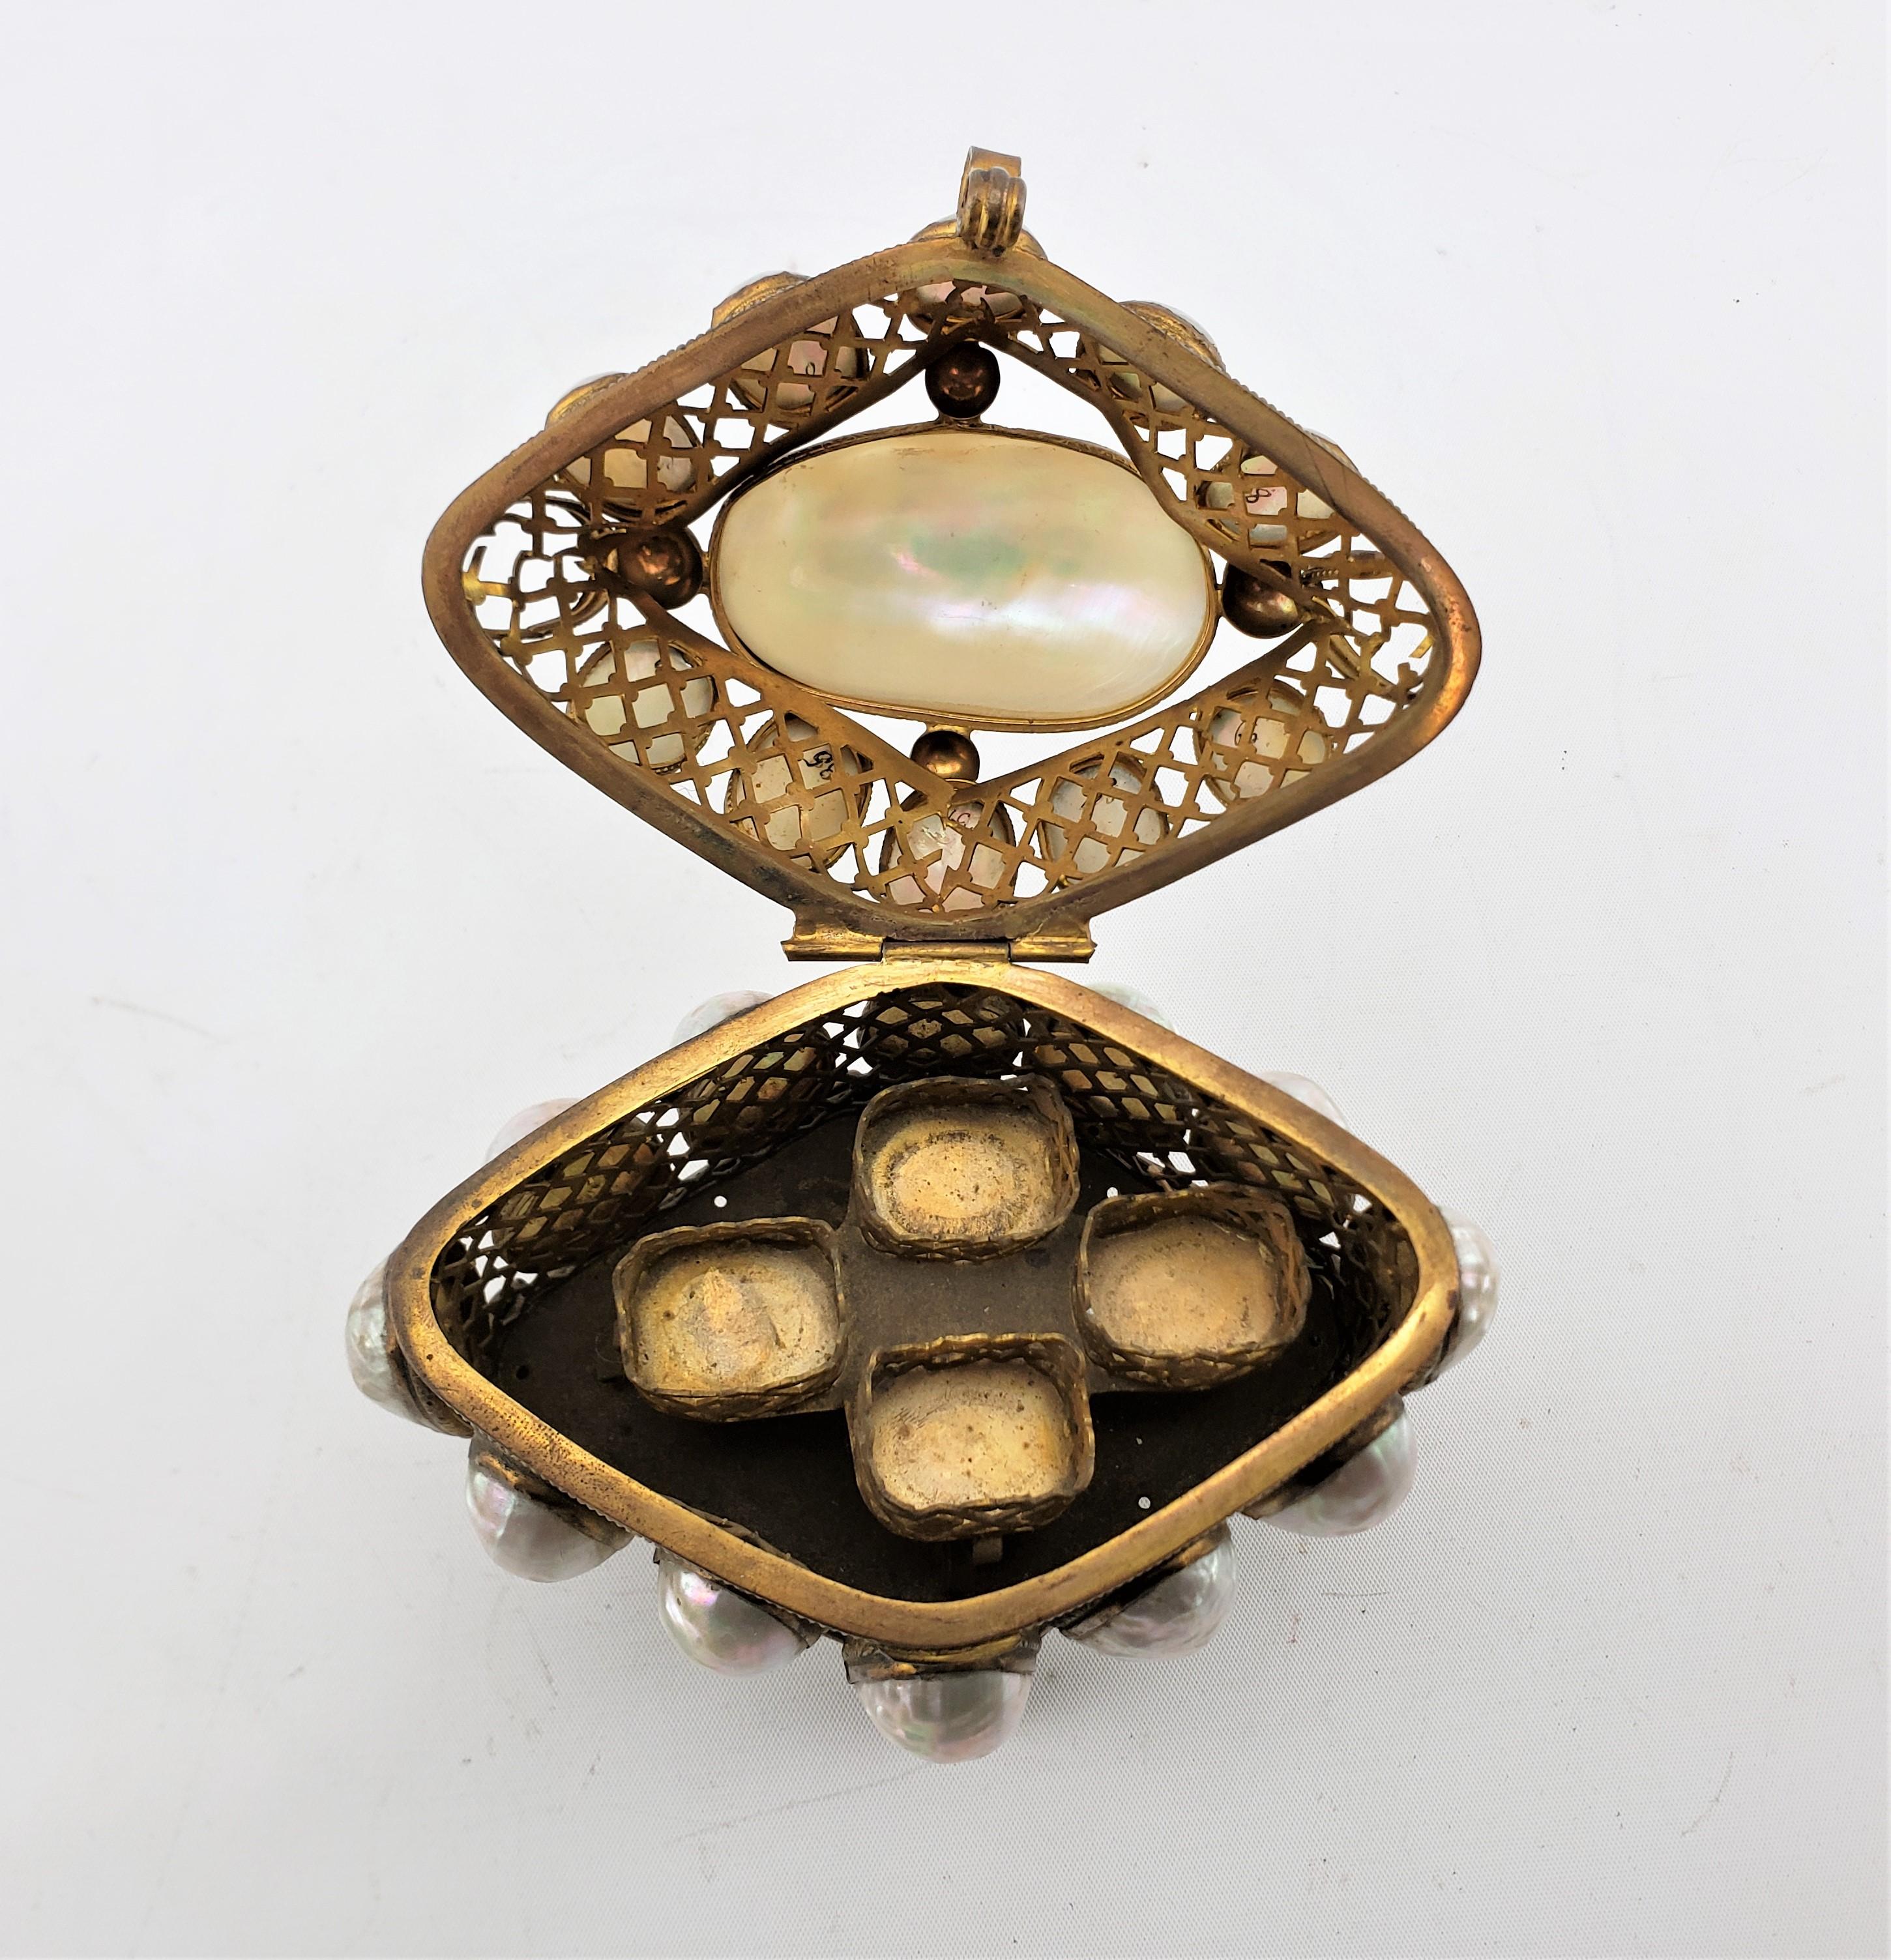 Antique Art Nouveau 3 Glass Perfume or Scent Bottle Set with Inset Shells For Sale 1